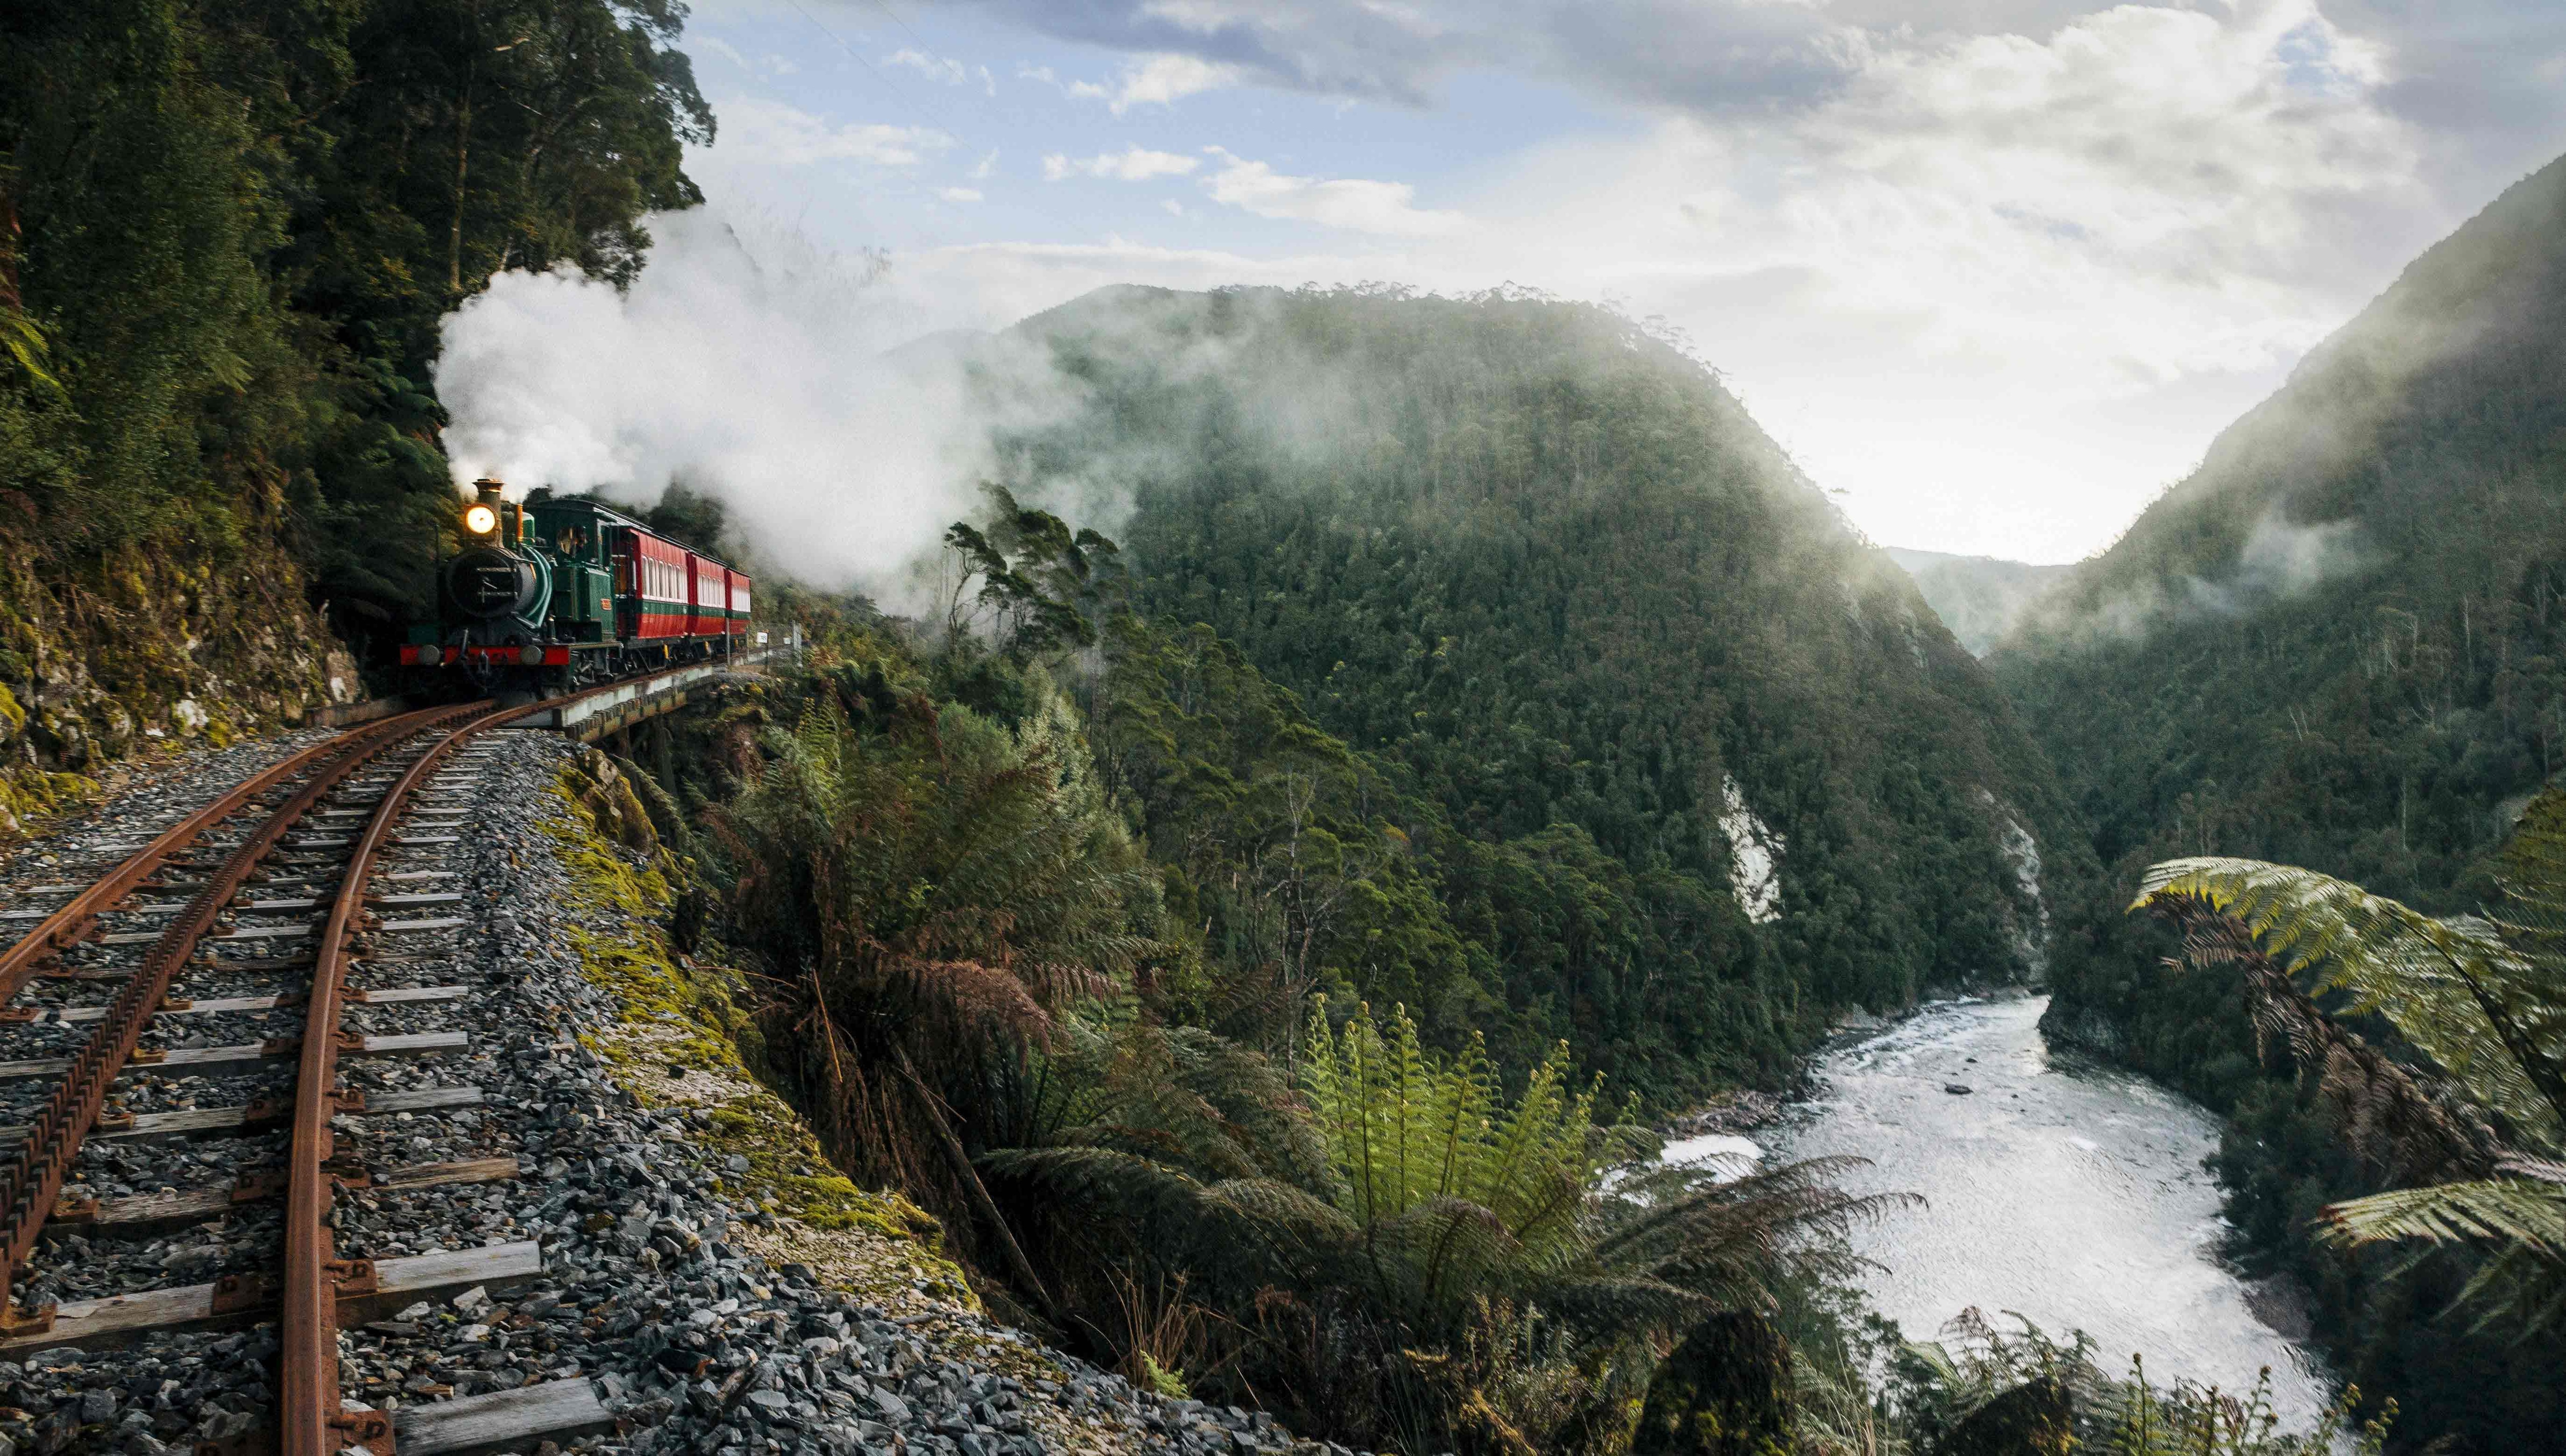 West Coast wilderness Railway (Image: West Coast Wilderness Railway)